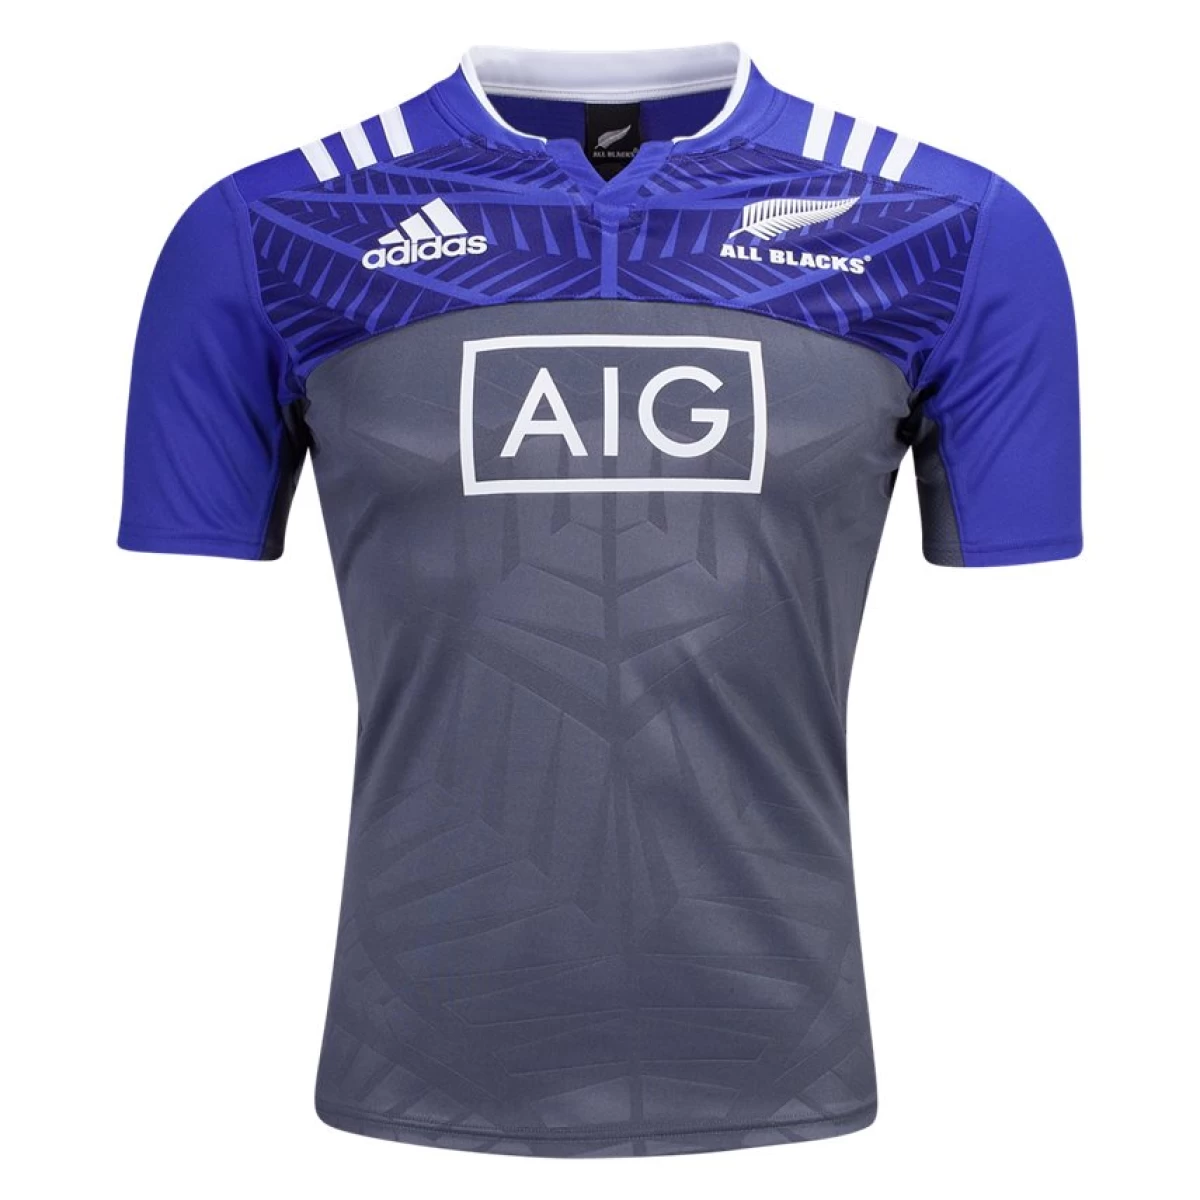 New Zealand All Blacks 2017 training rugby jersey shirt S-3XL 